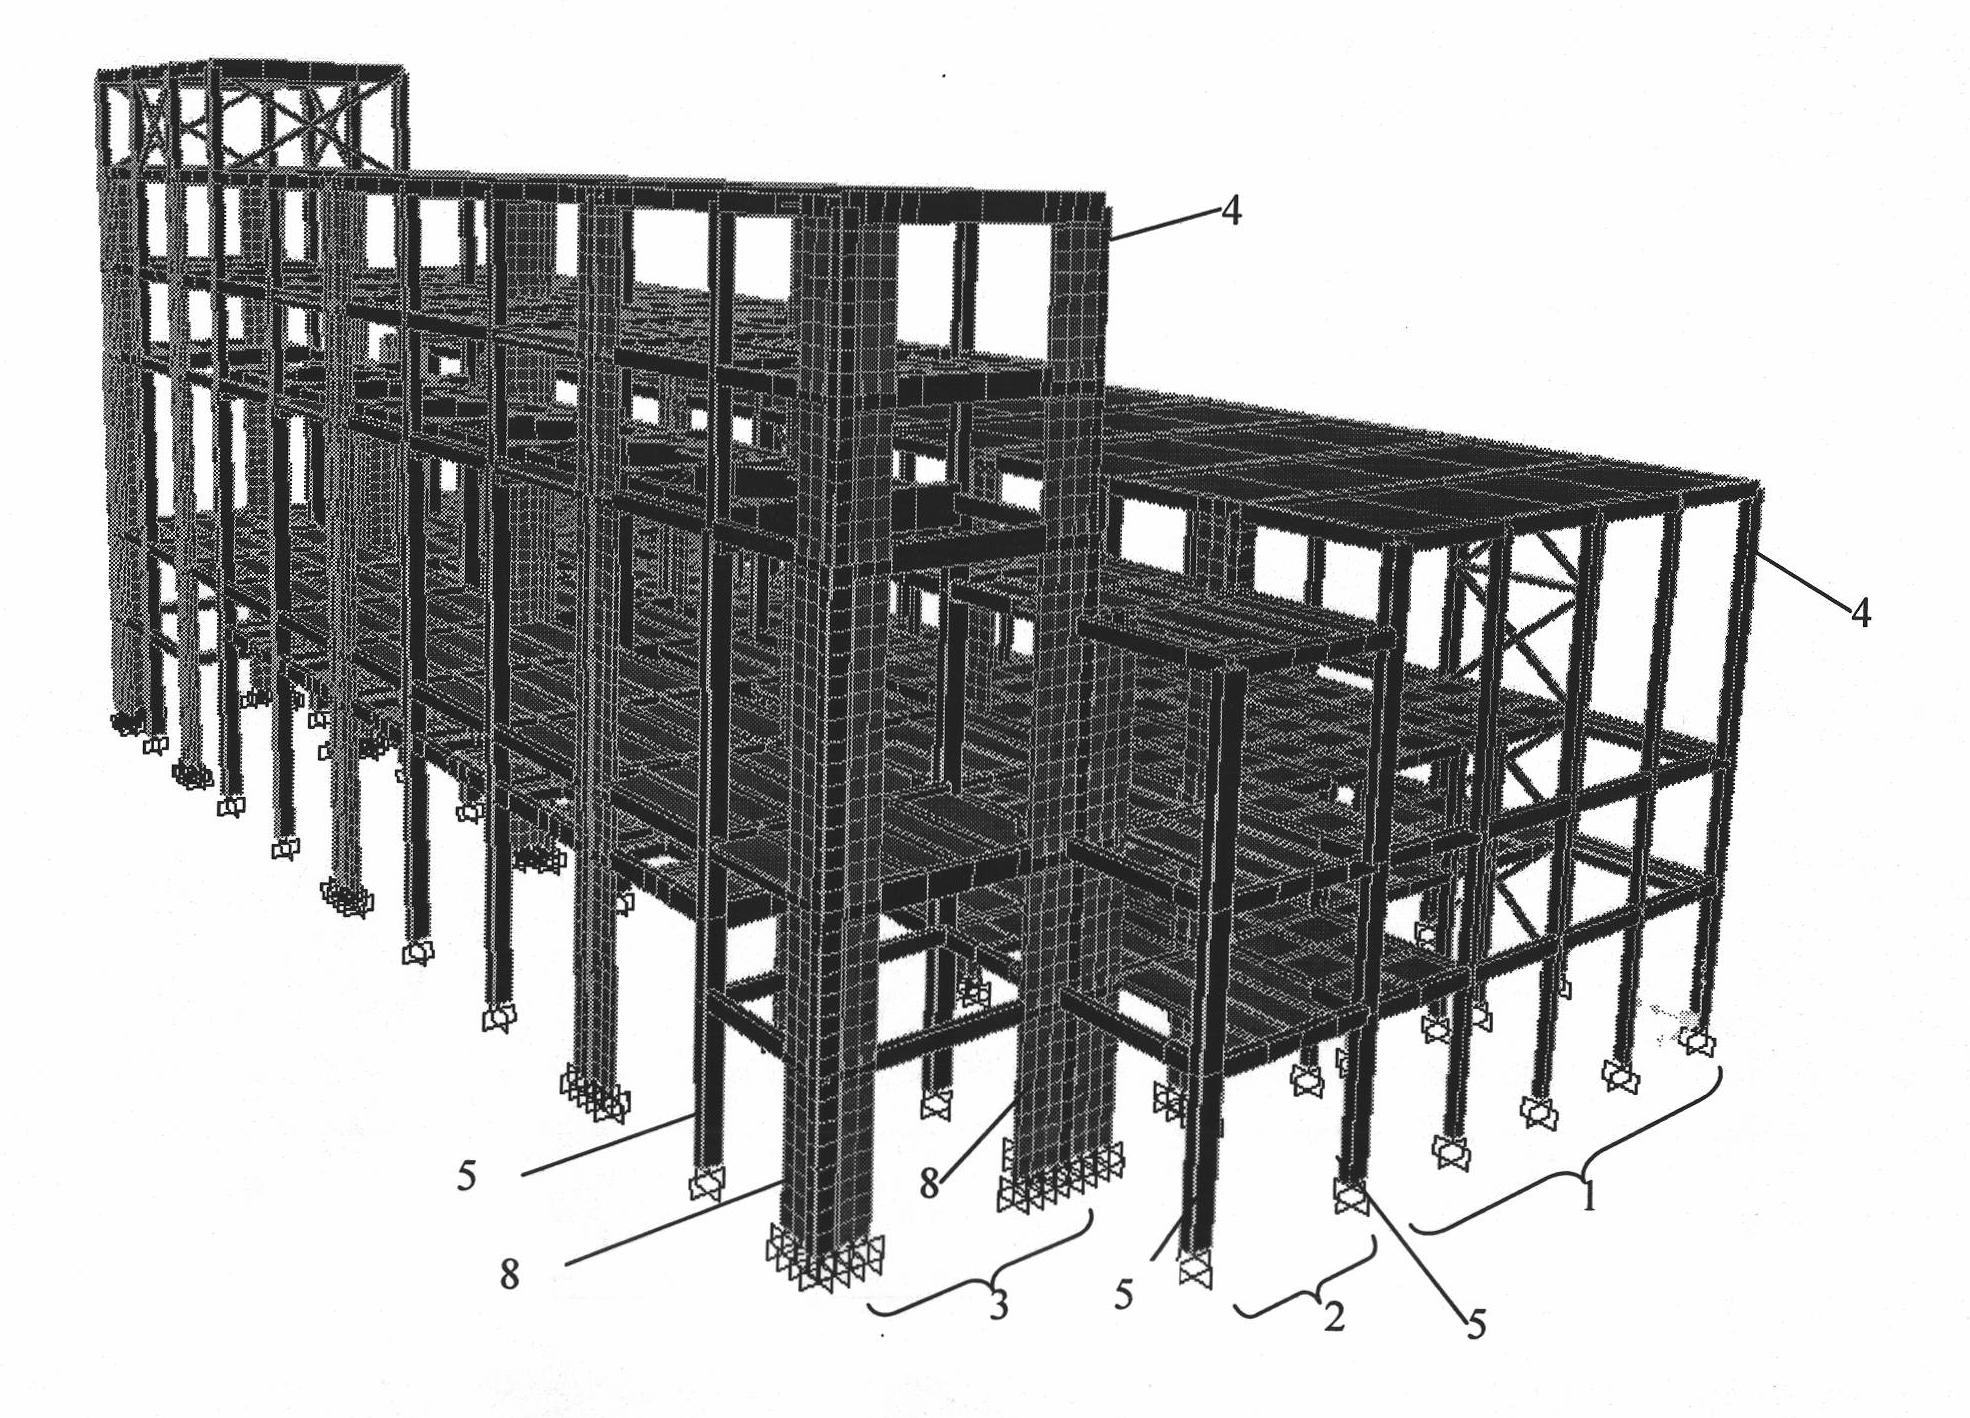 Main workshop structure of large heat power plant